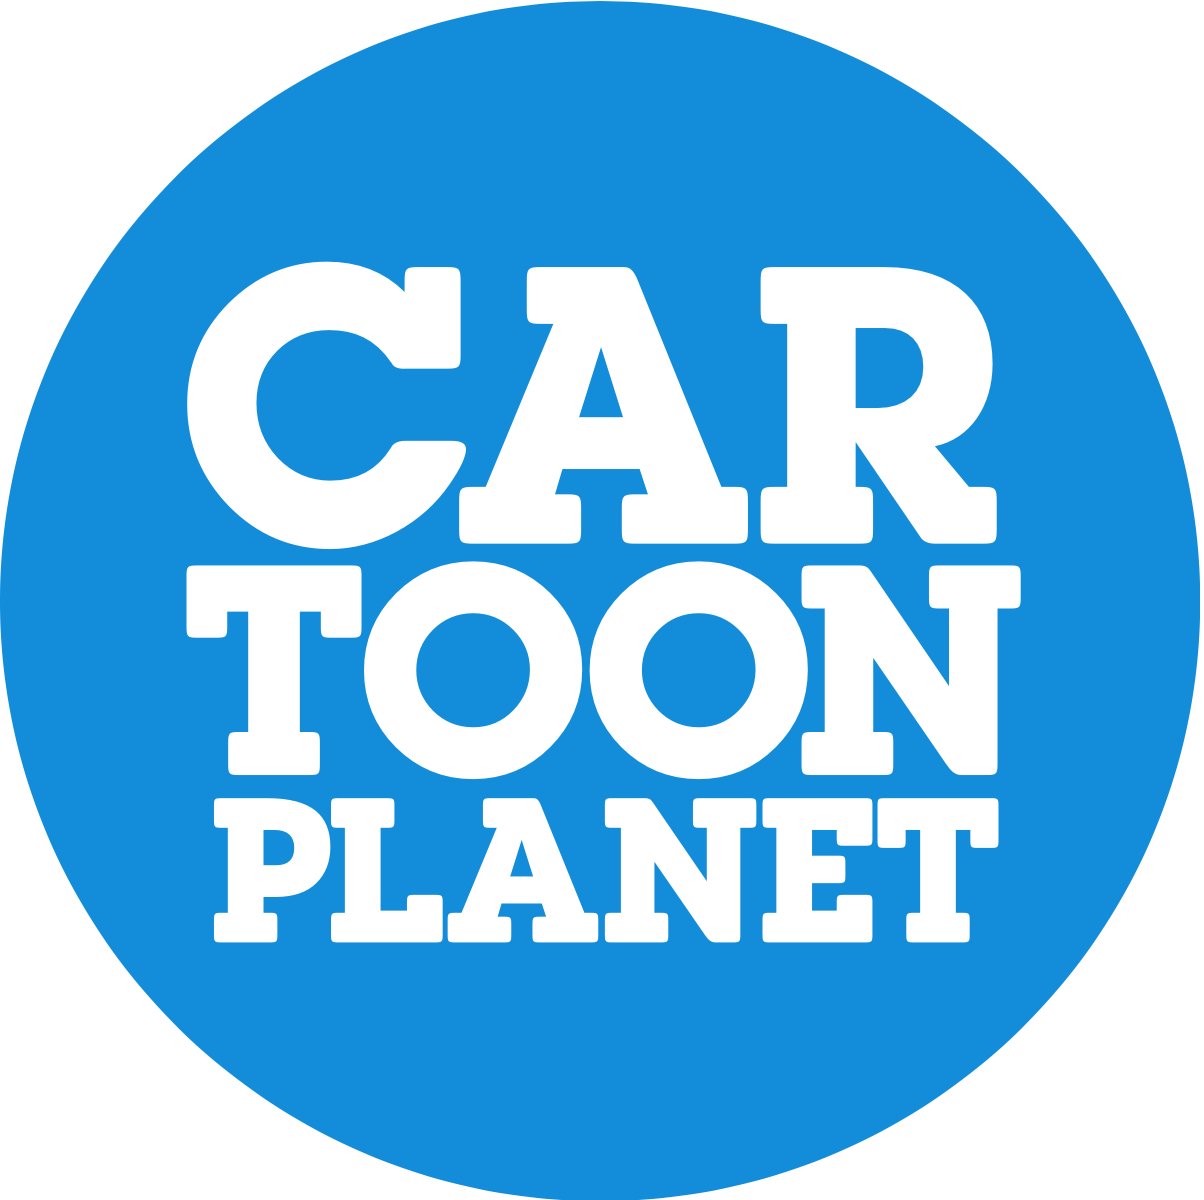 Cartoon planet revival logo.jpeg